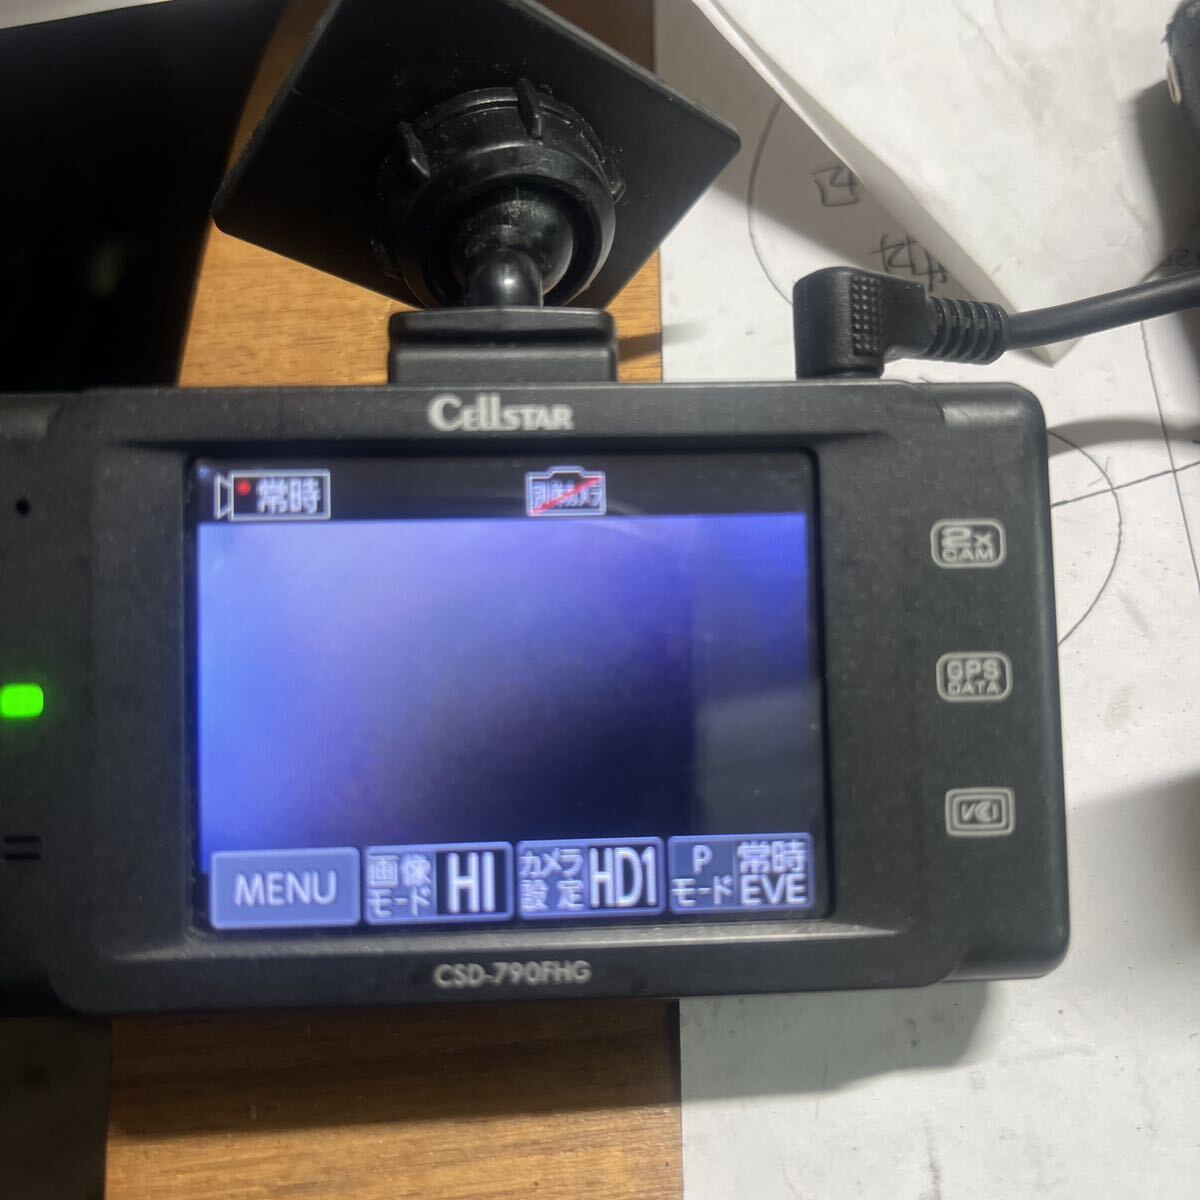 CSD-790FHG регистратор пути (drive recorder) Cellstar передний и задний (до и после) Junk парковочная камера код нет 